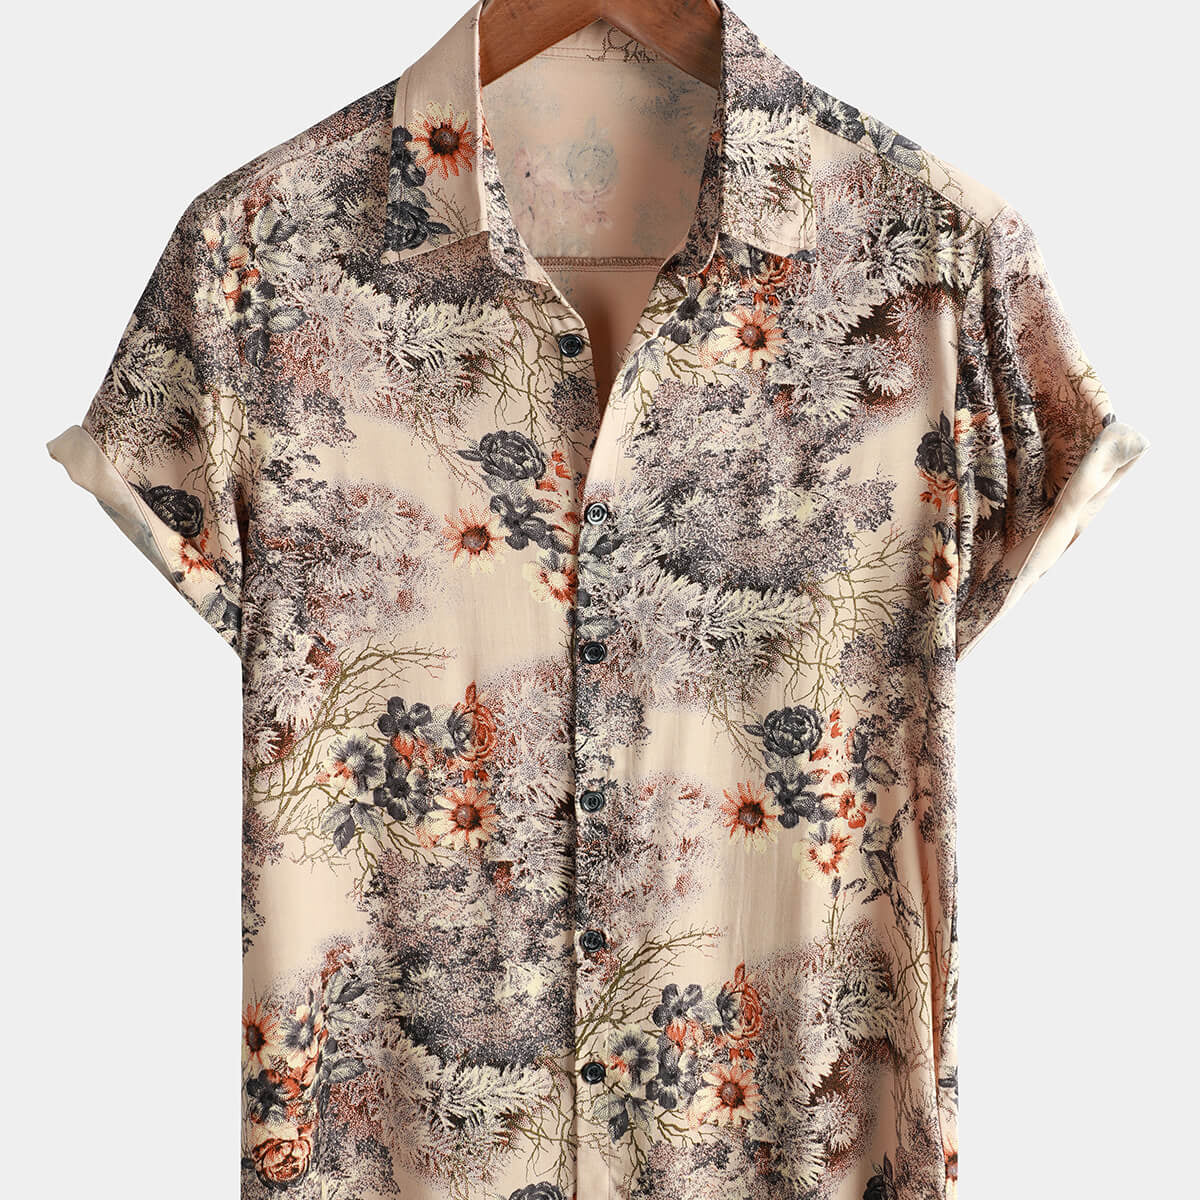 Men's Floral Print Retro Casual Button Up Shirt